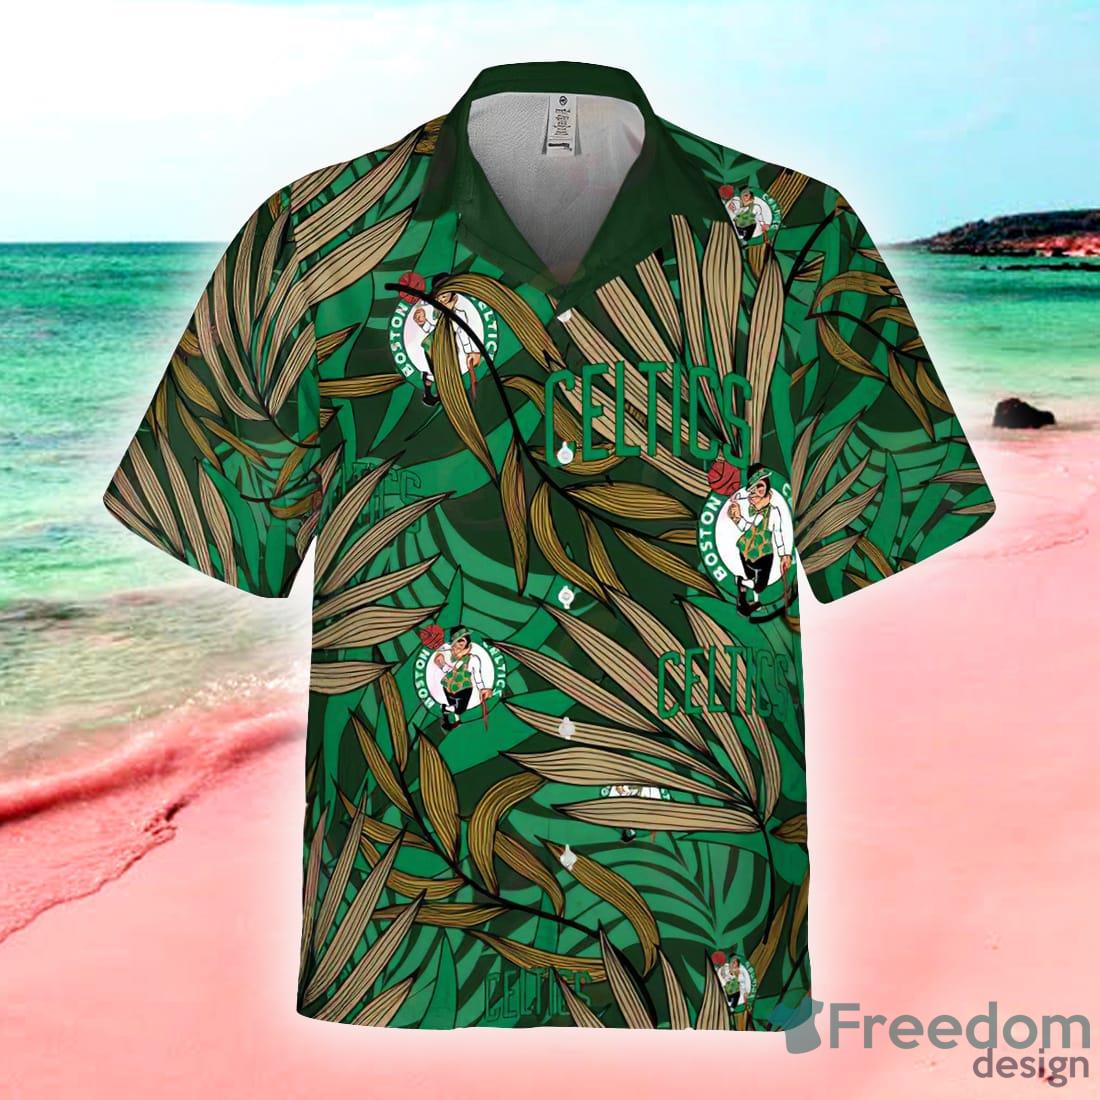 Boston Celtics Vacation Hawaiian Shirt For Men And Women Gift